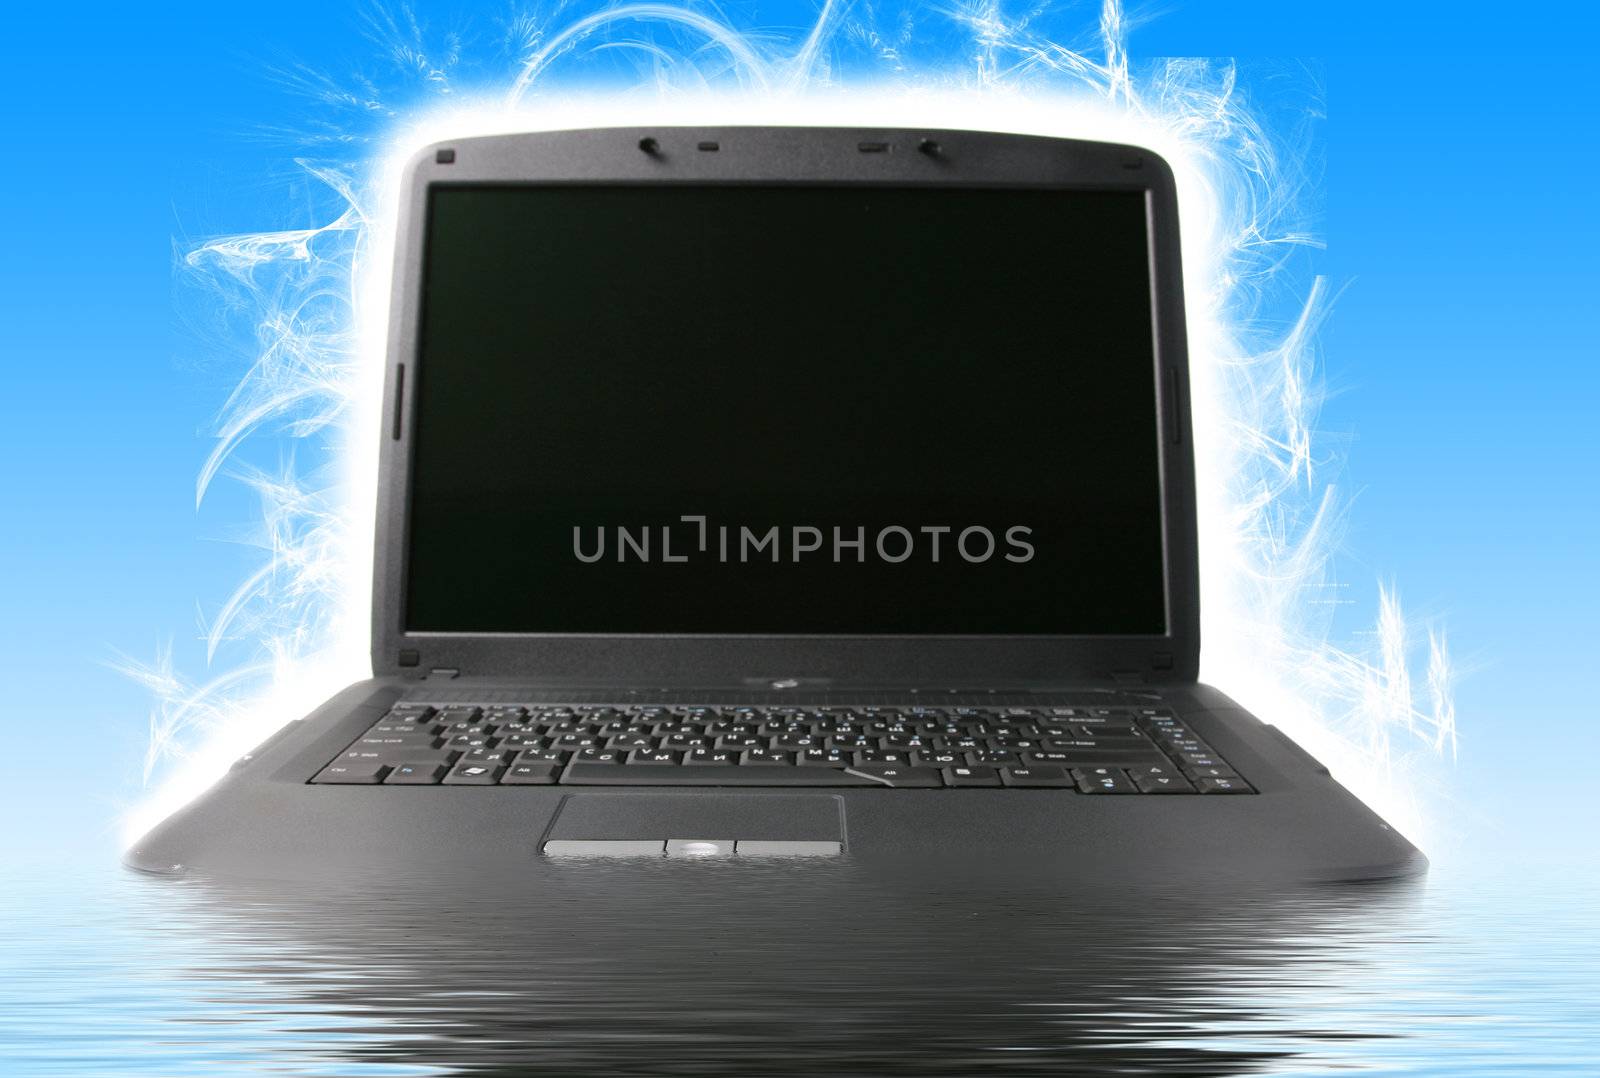 Black laptop in water on a dark blue background